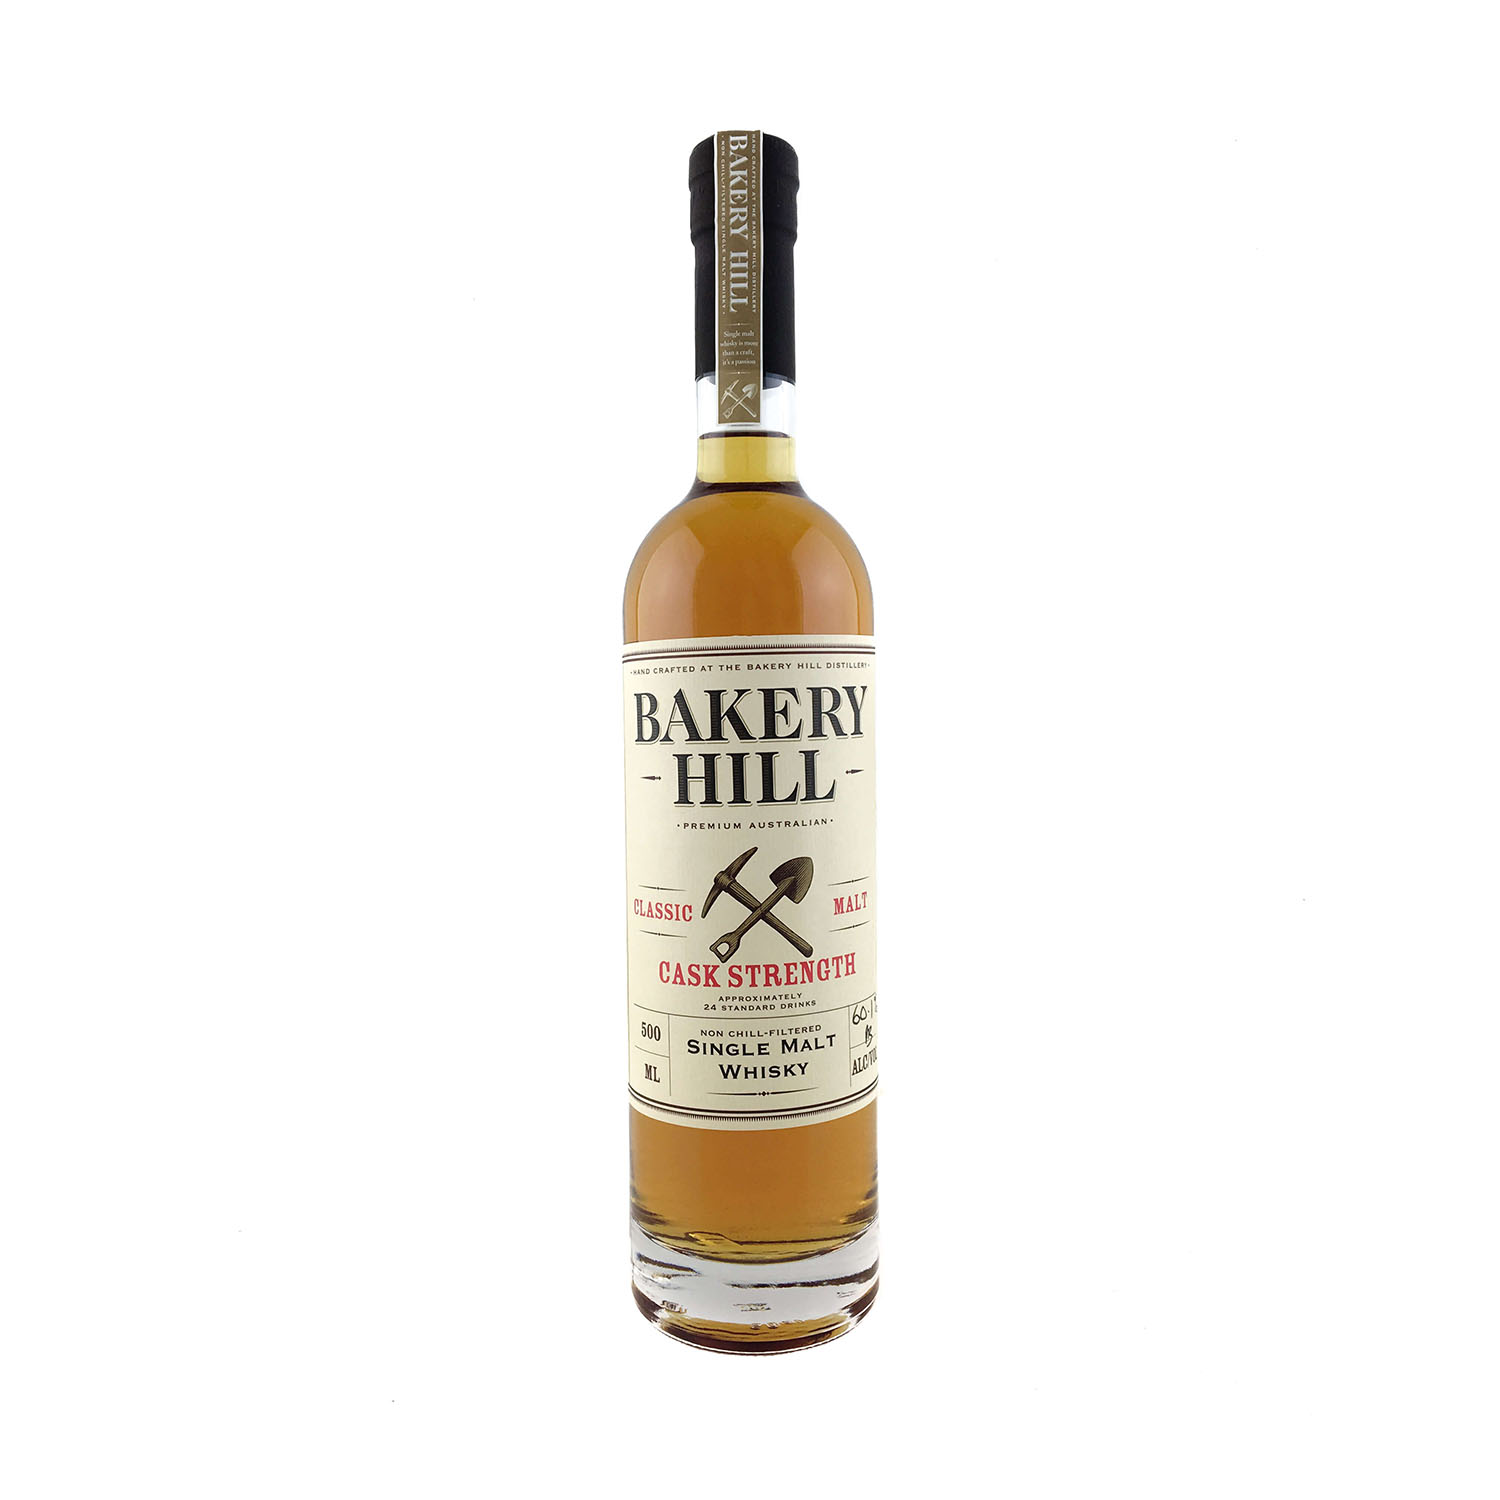 Bakery Hill Classic ‘Cask Strength’ Single Malt Whisky, Australian Whisky, The Old Barrelhouse